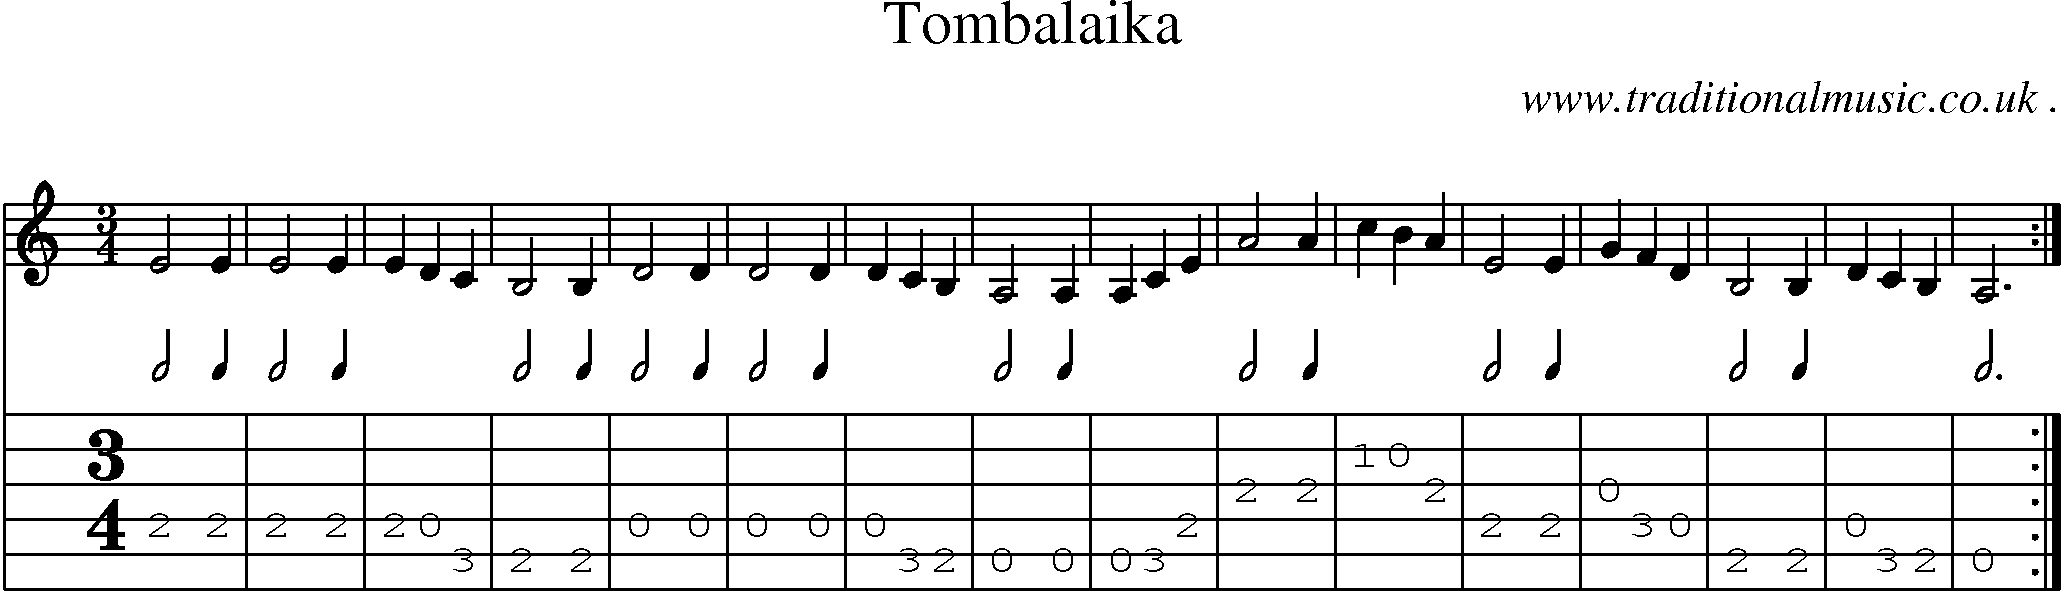 Sheet-Music and Guitar Tabs for Tombalaika